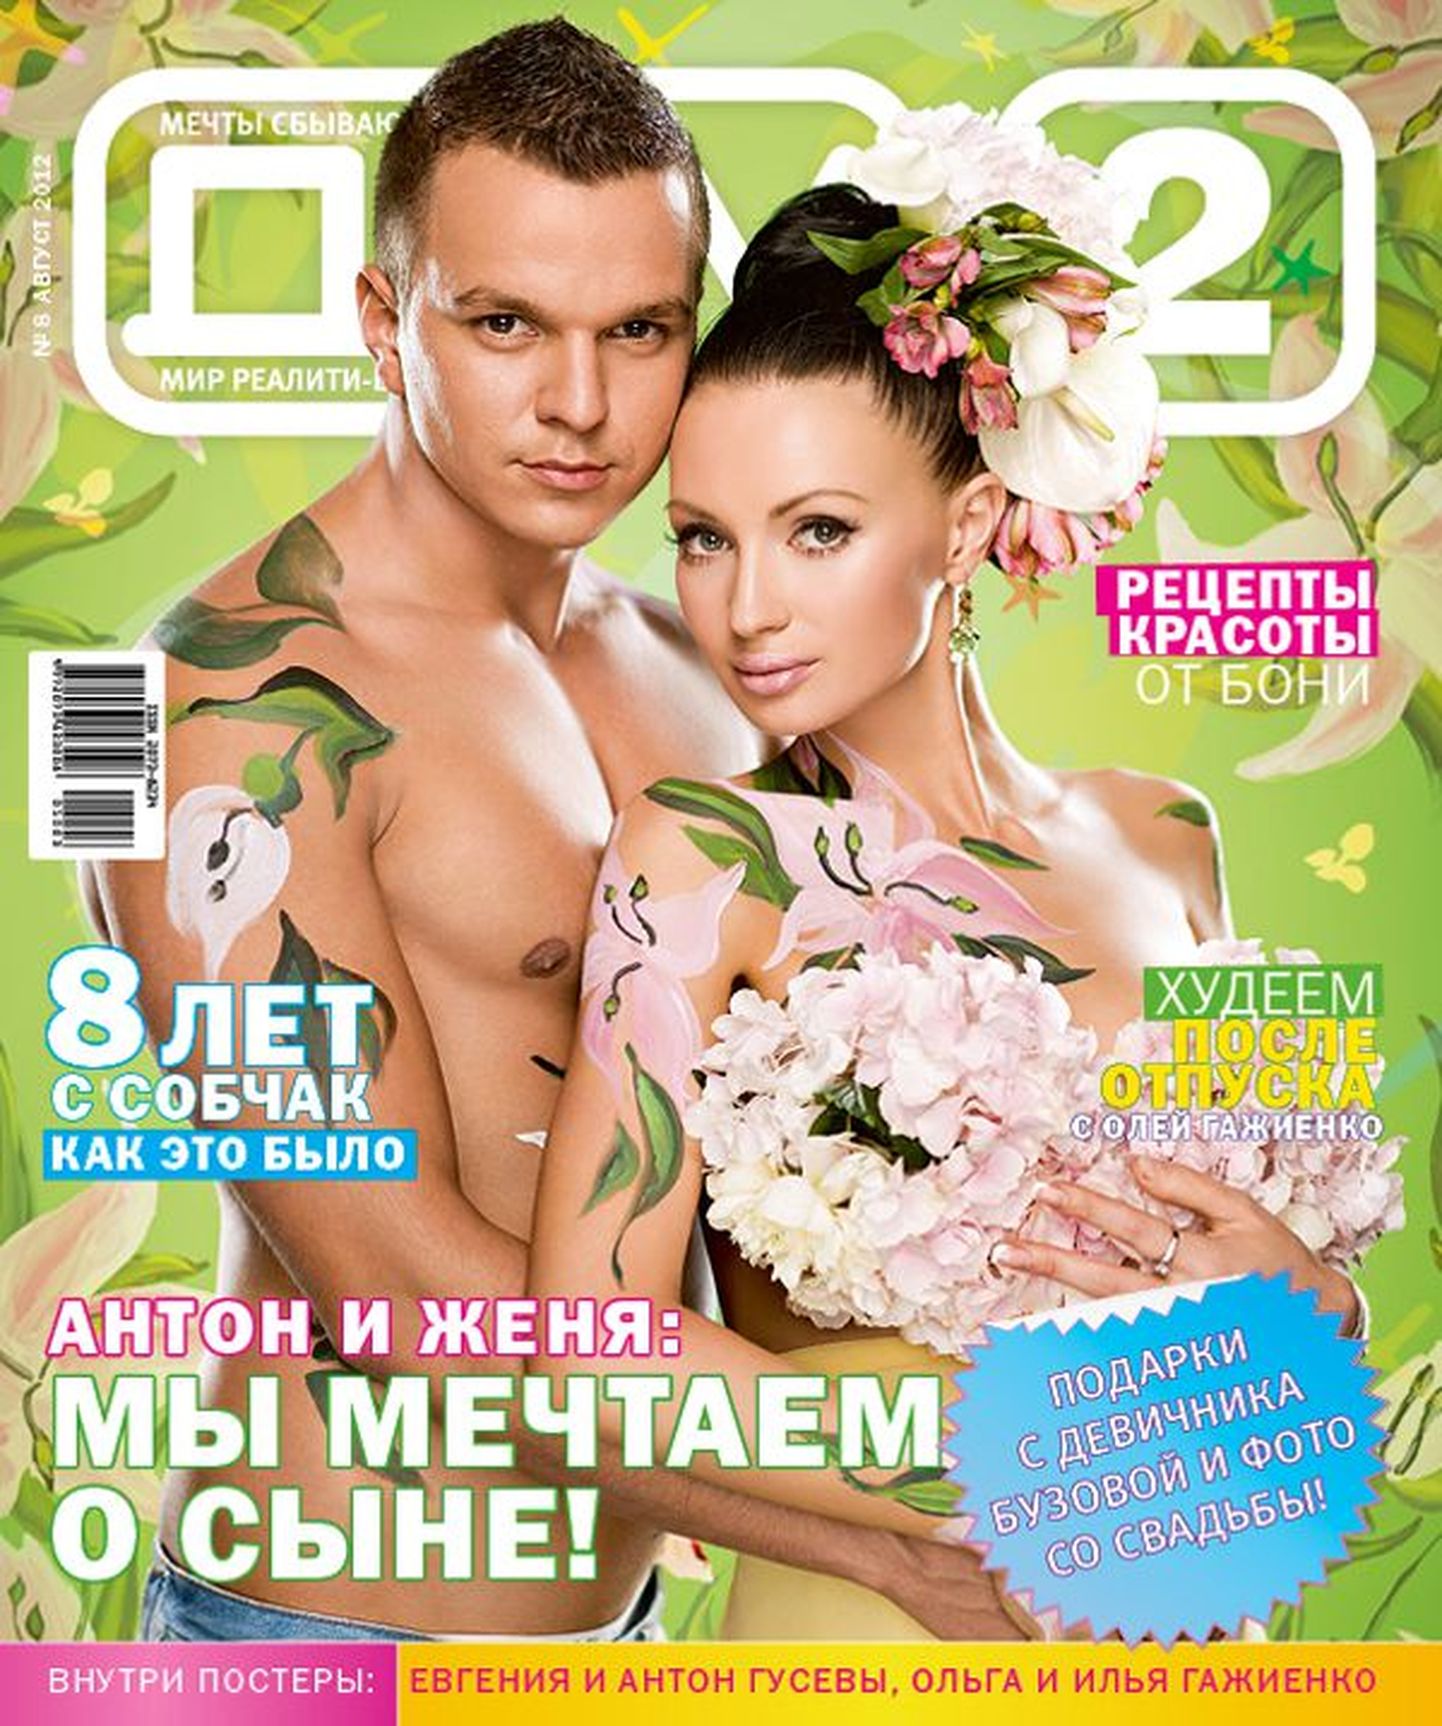 Обложка журнала "Дом-2".